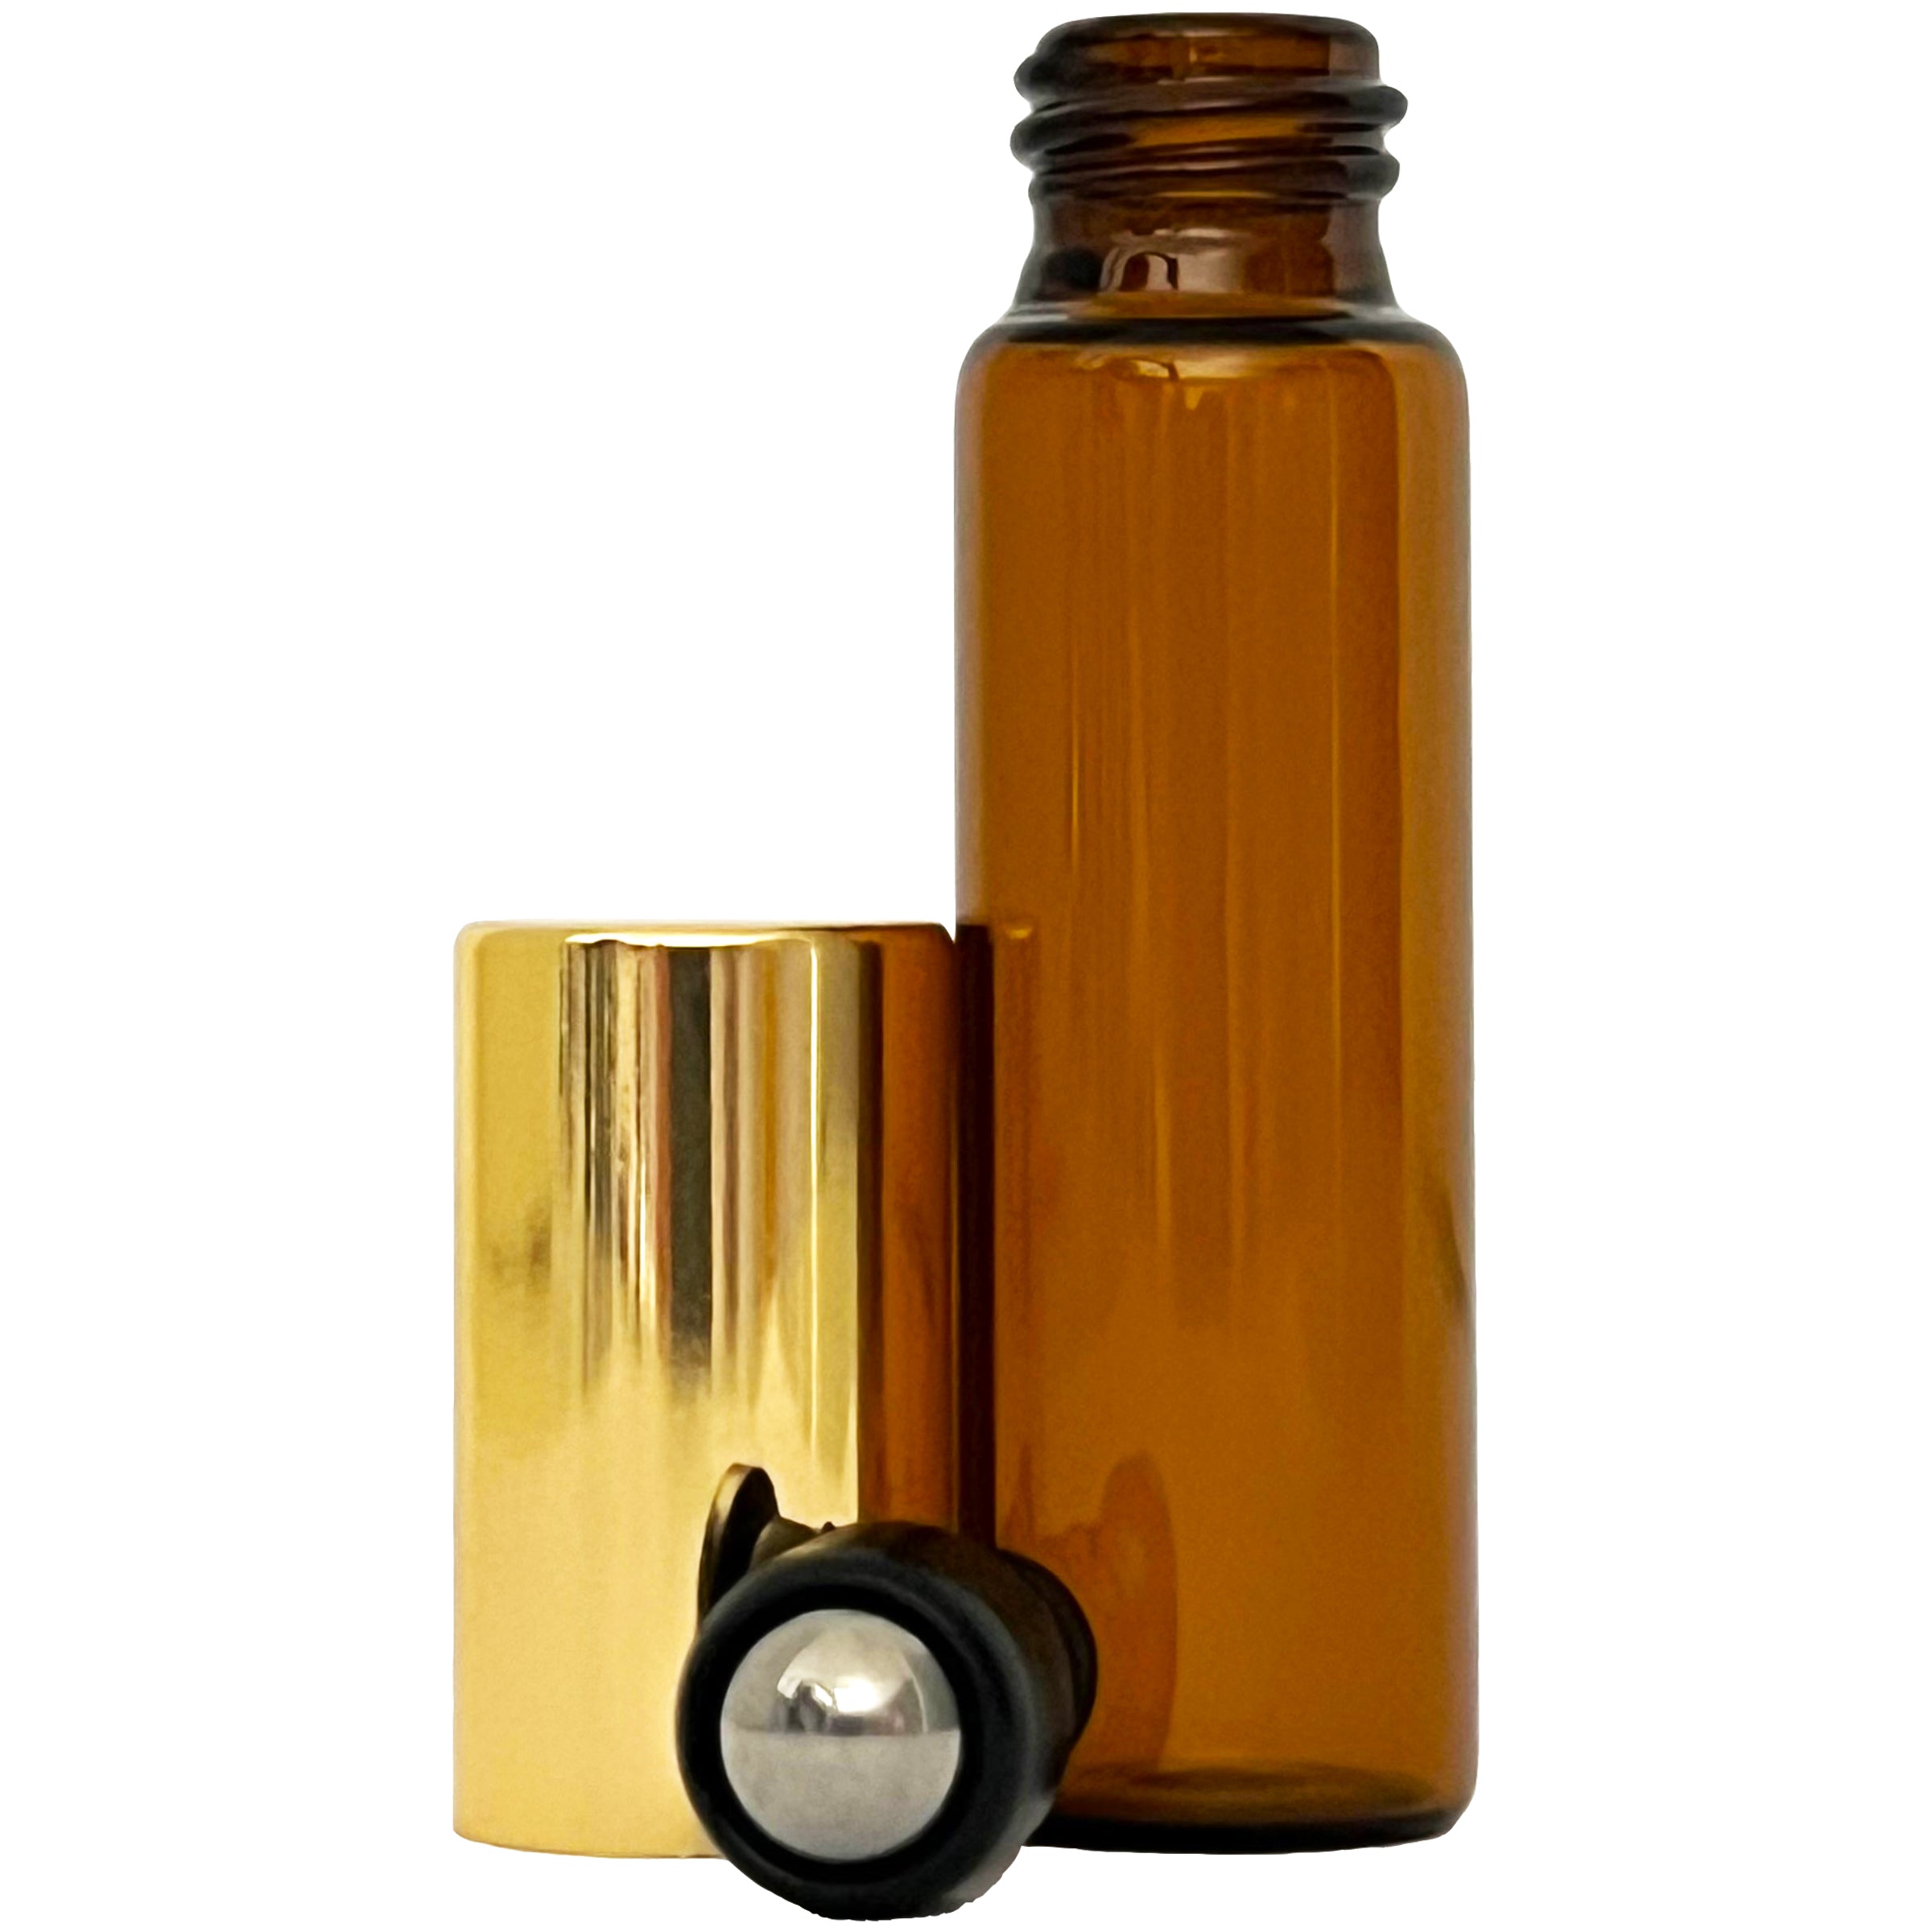 5ml 0.17oz Amber Gold Glass Roll On Roller Ball Bottle Perfume Essential Oils